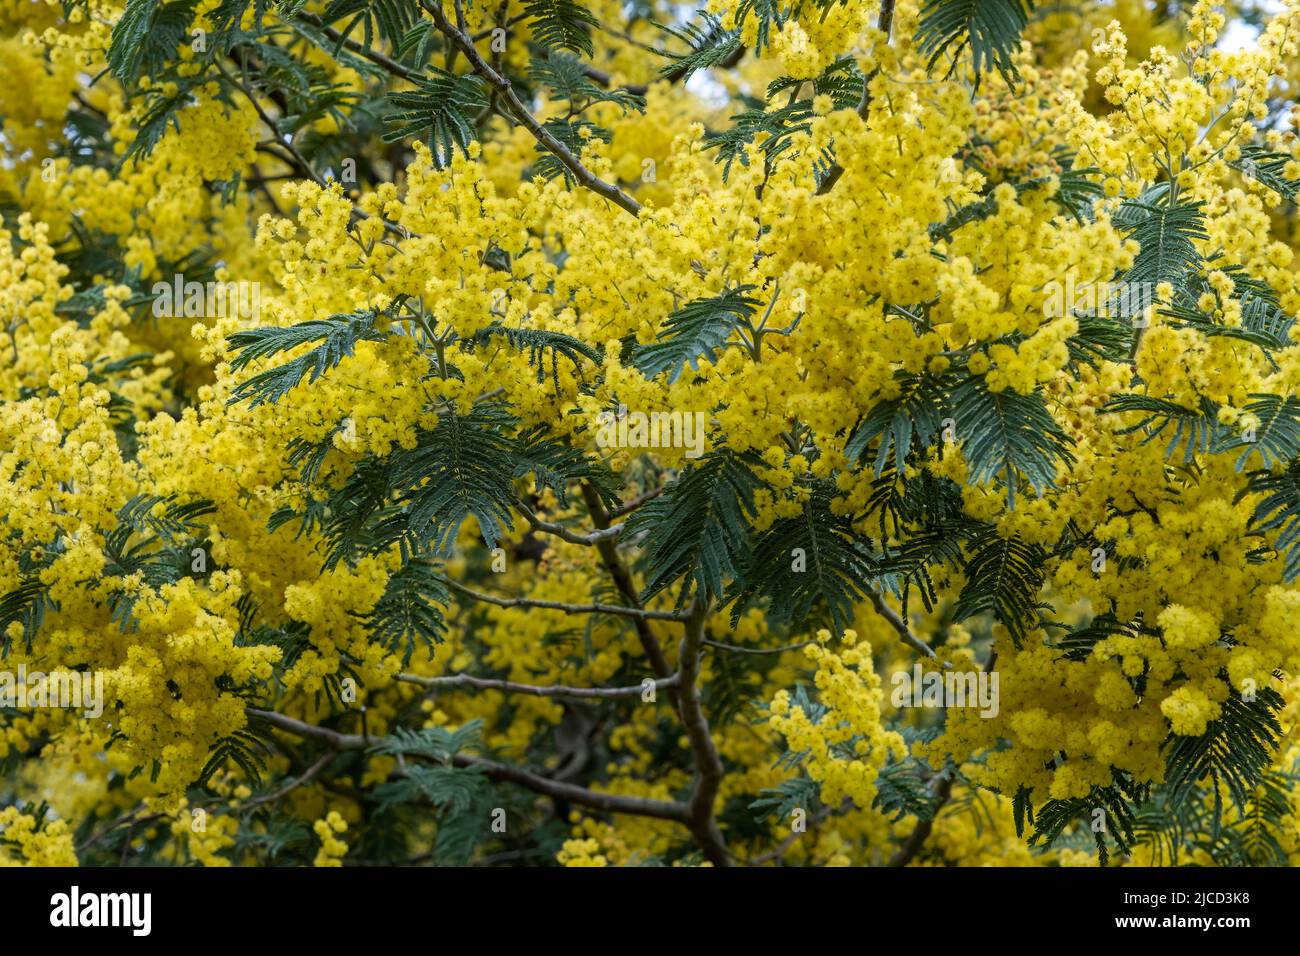 Acacia dealbata argent liquide fleurs jaunes fleuries Banque D'Images